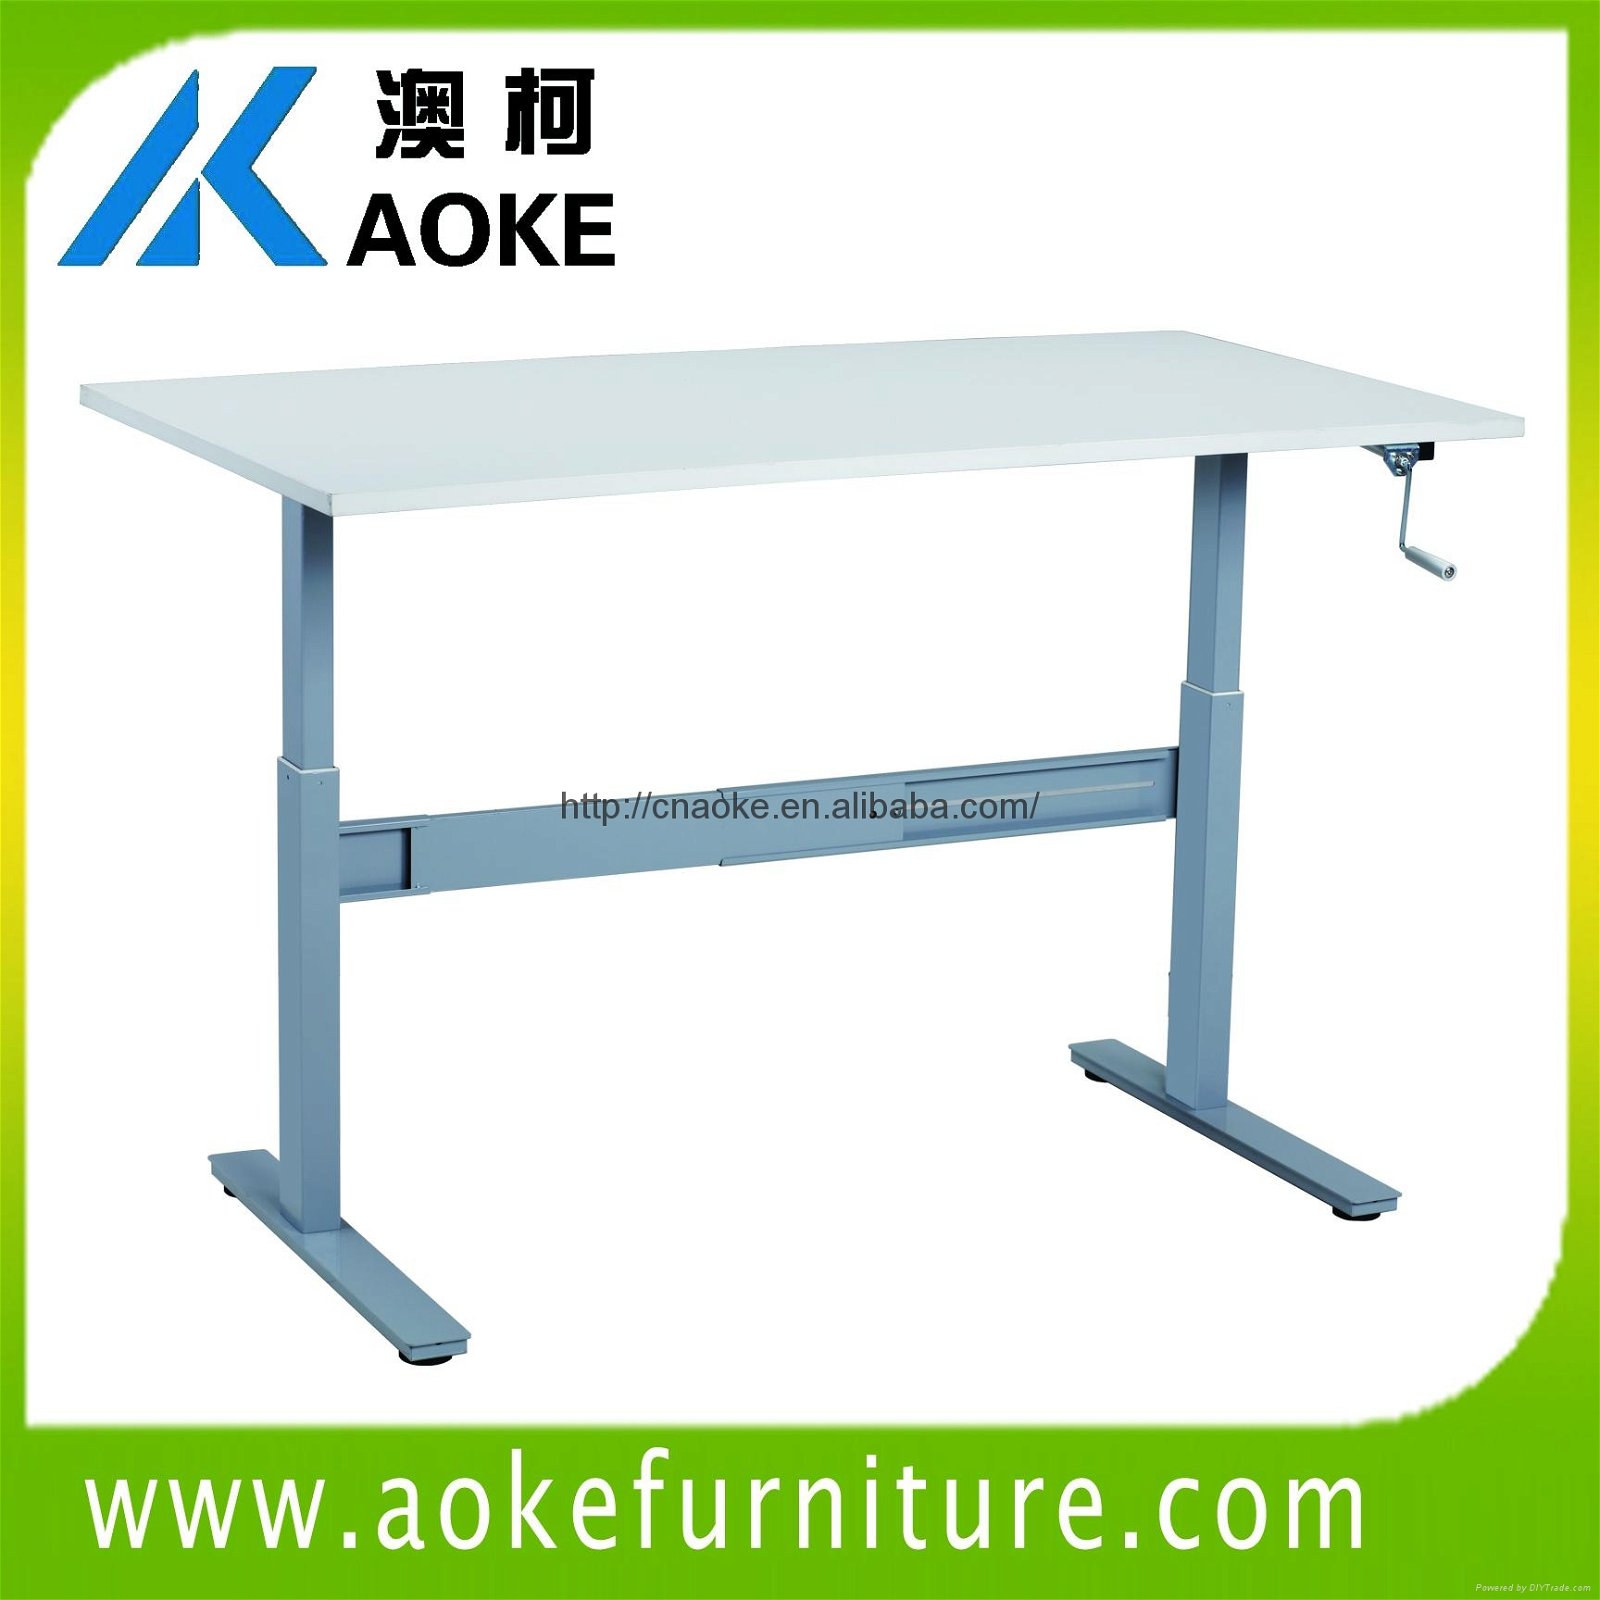 AOKE AK02HT-B manual cranked adjustable tables 4